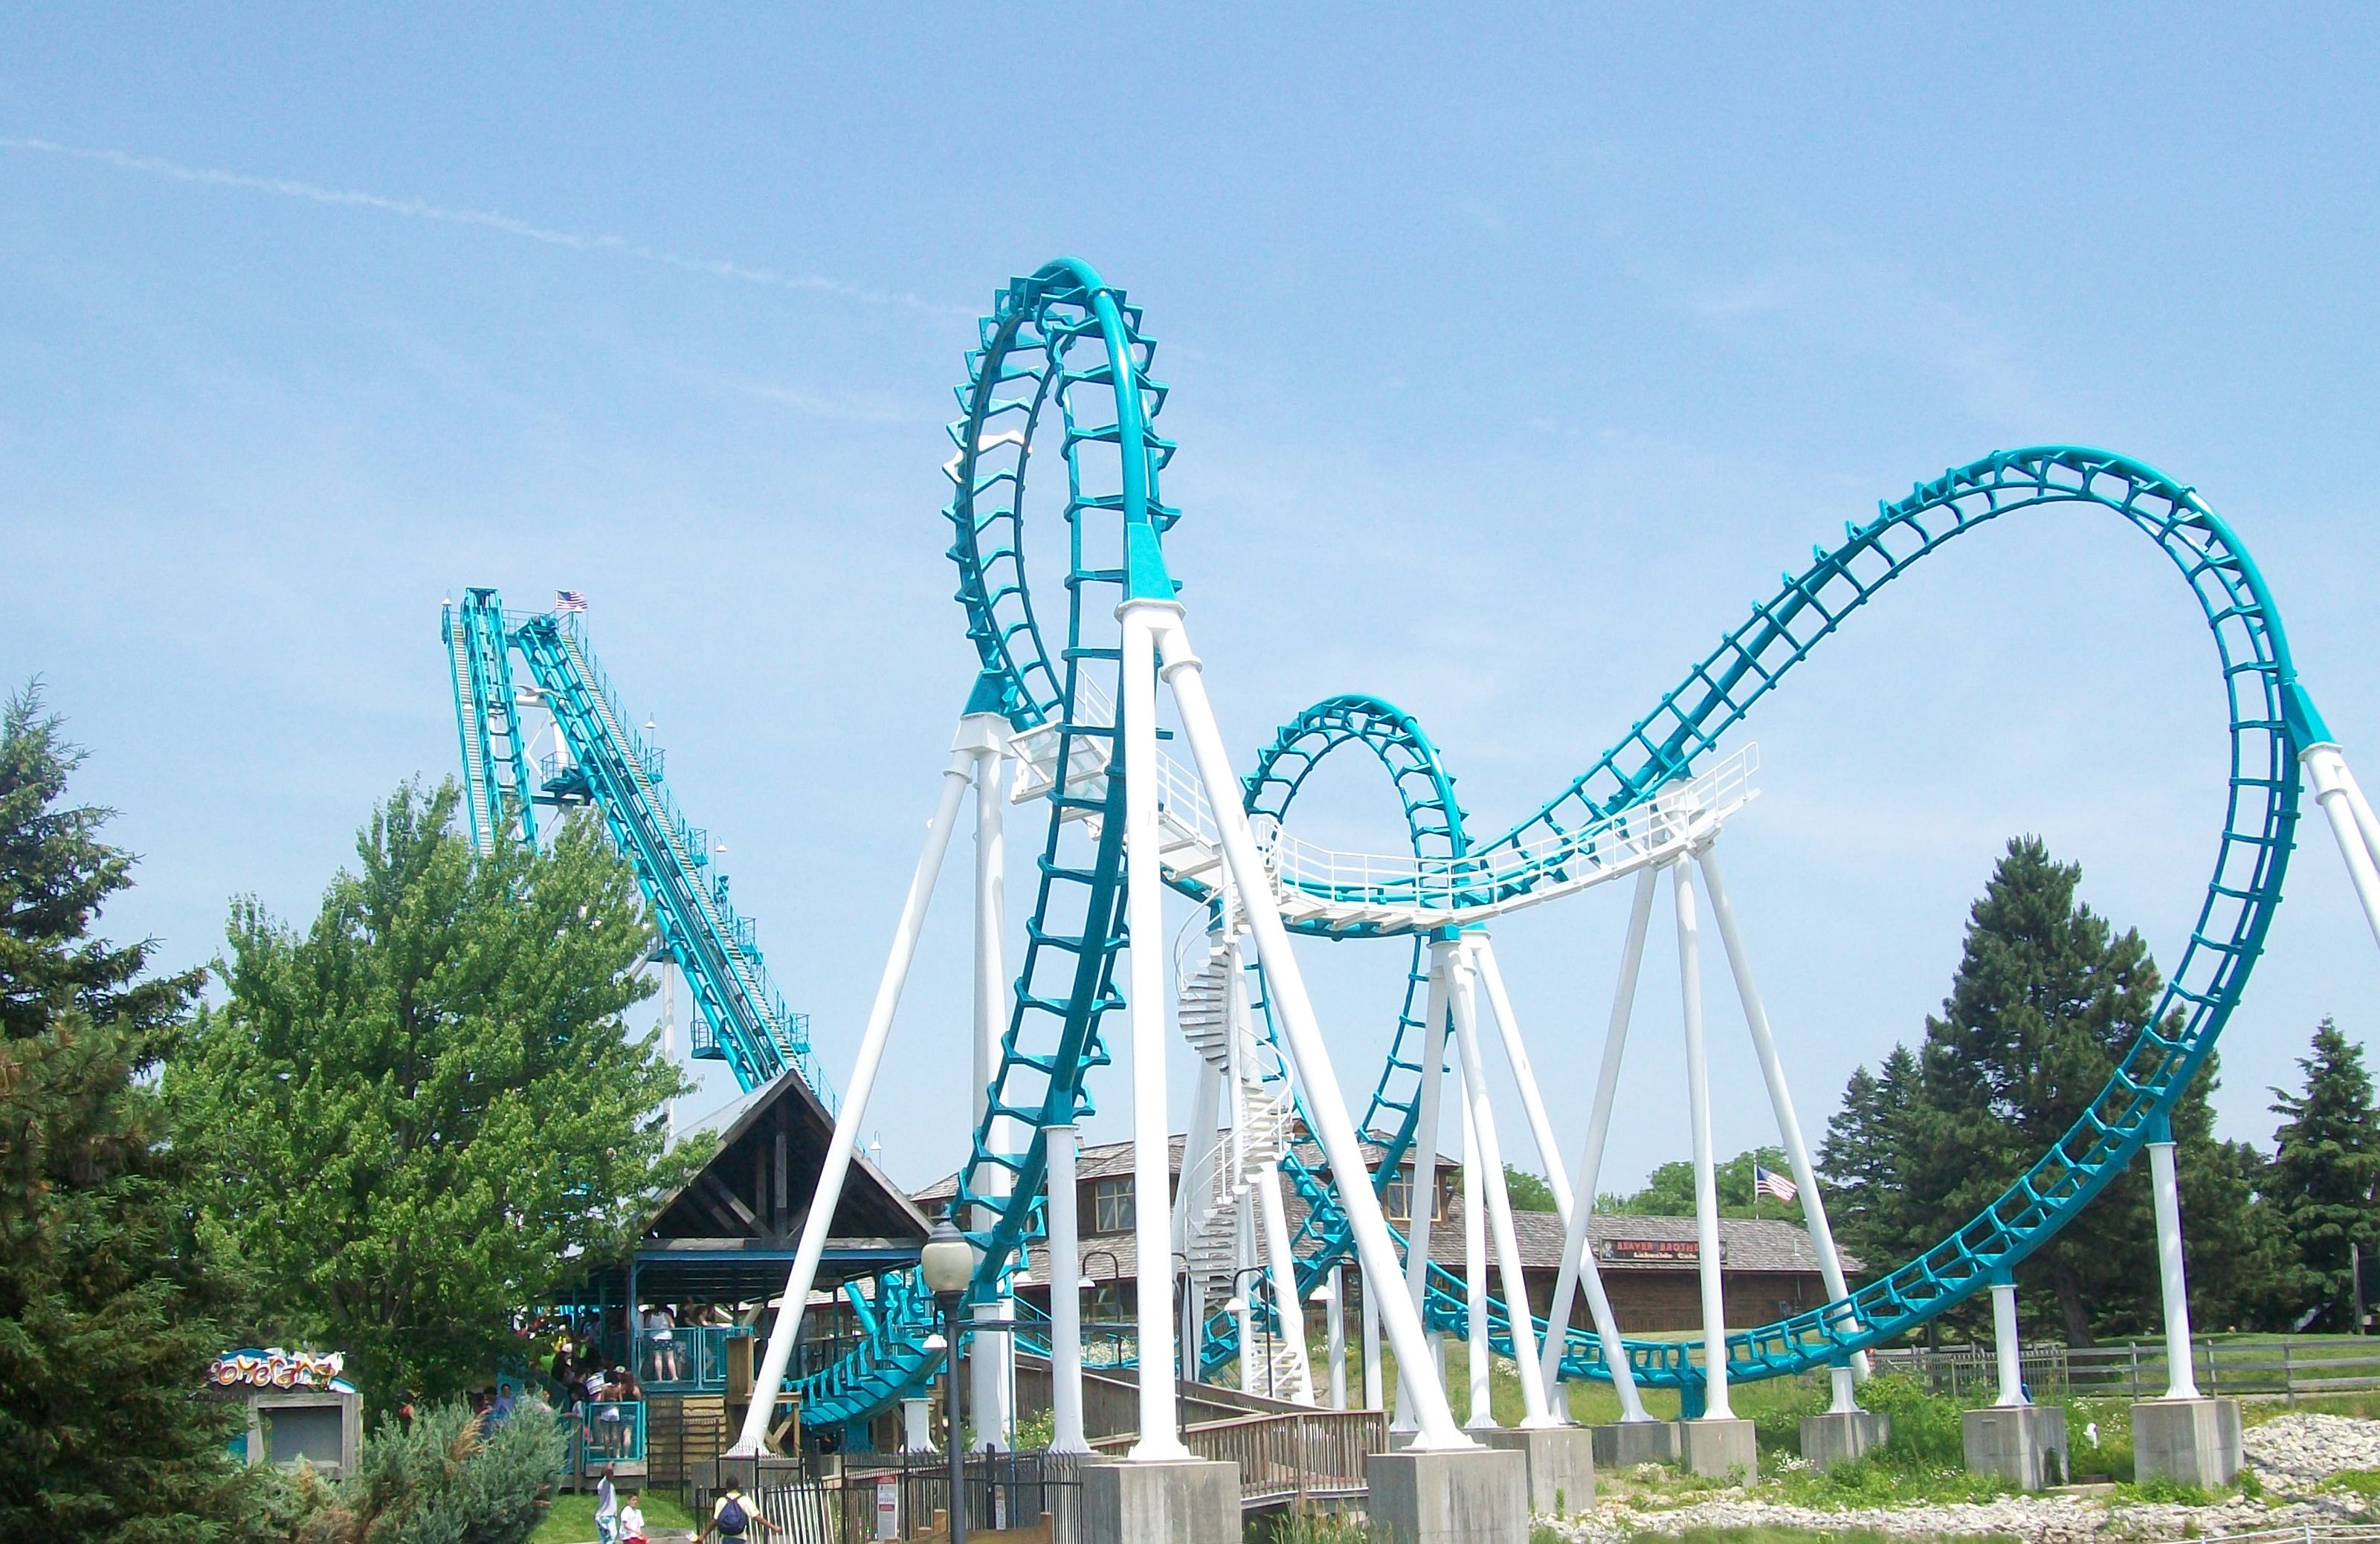 A roller coaster at Darien Lake Theme Park, Upstate New York